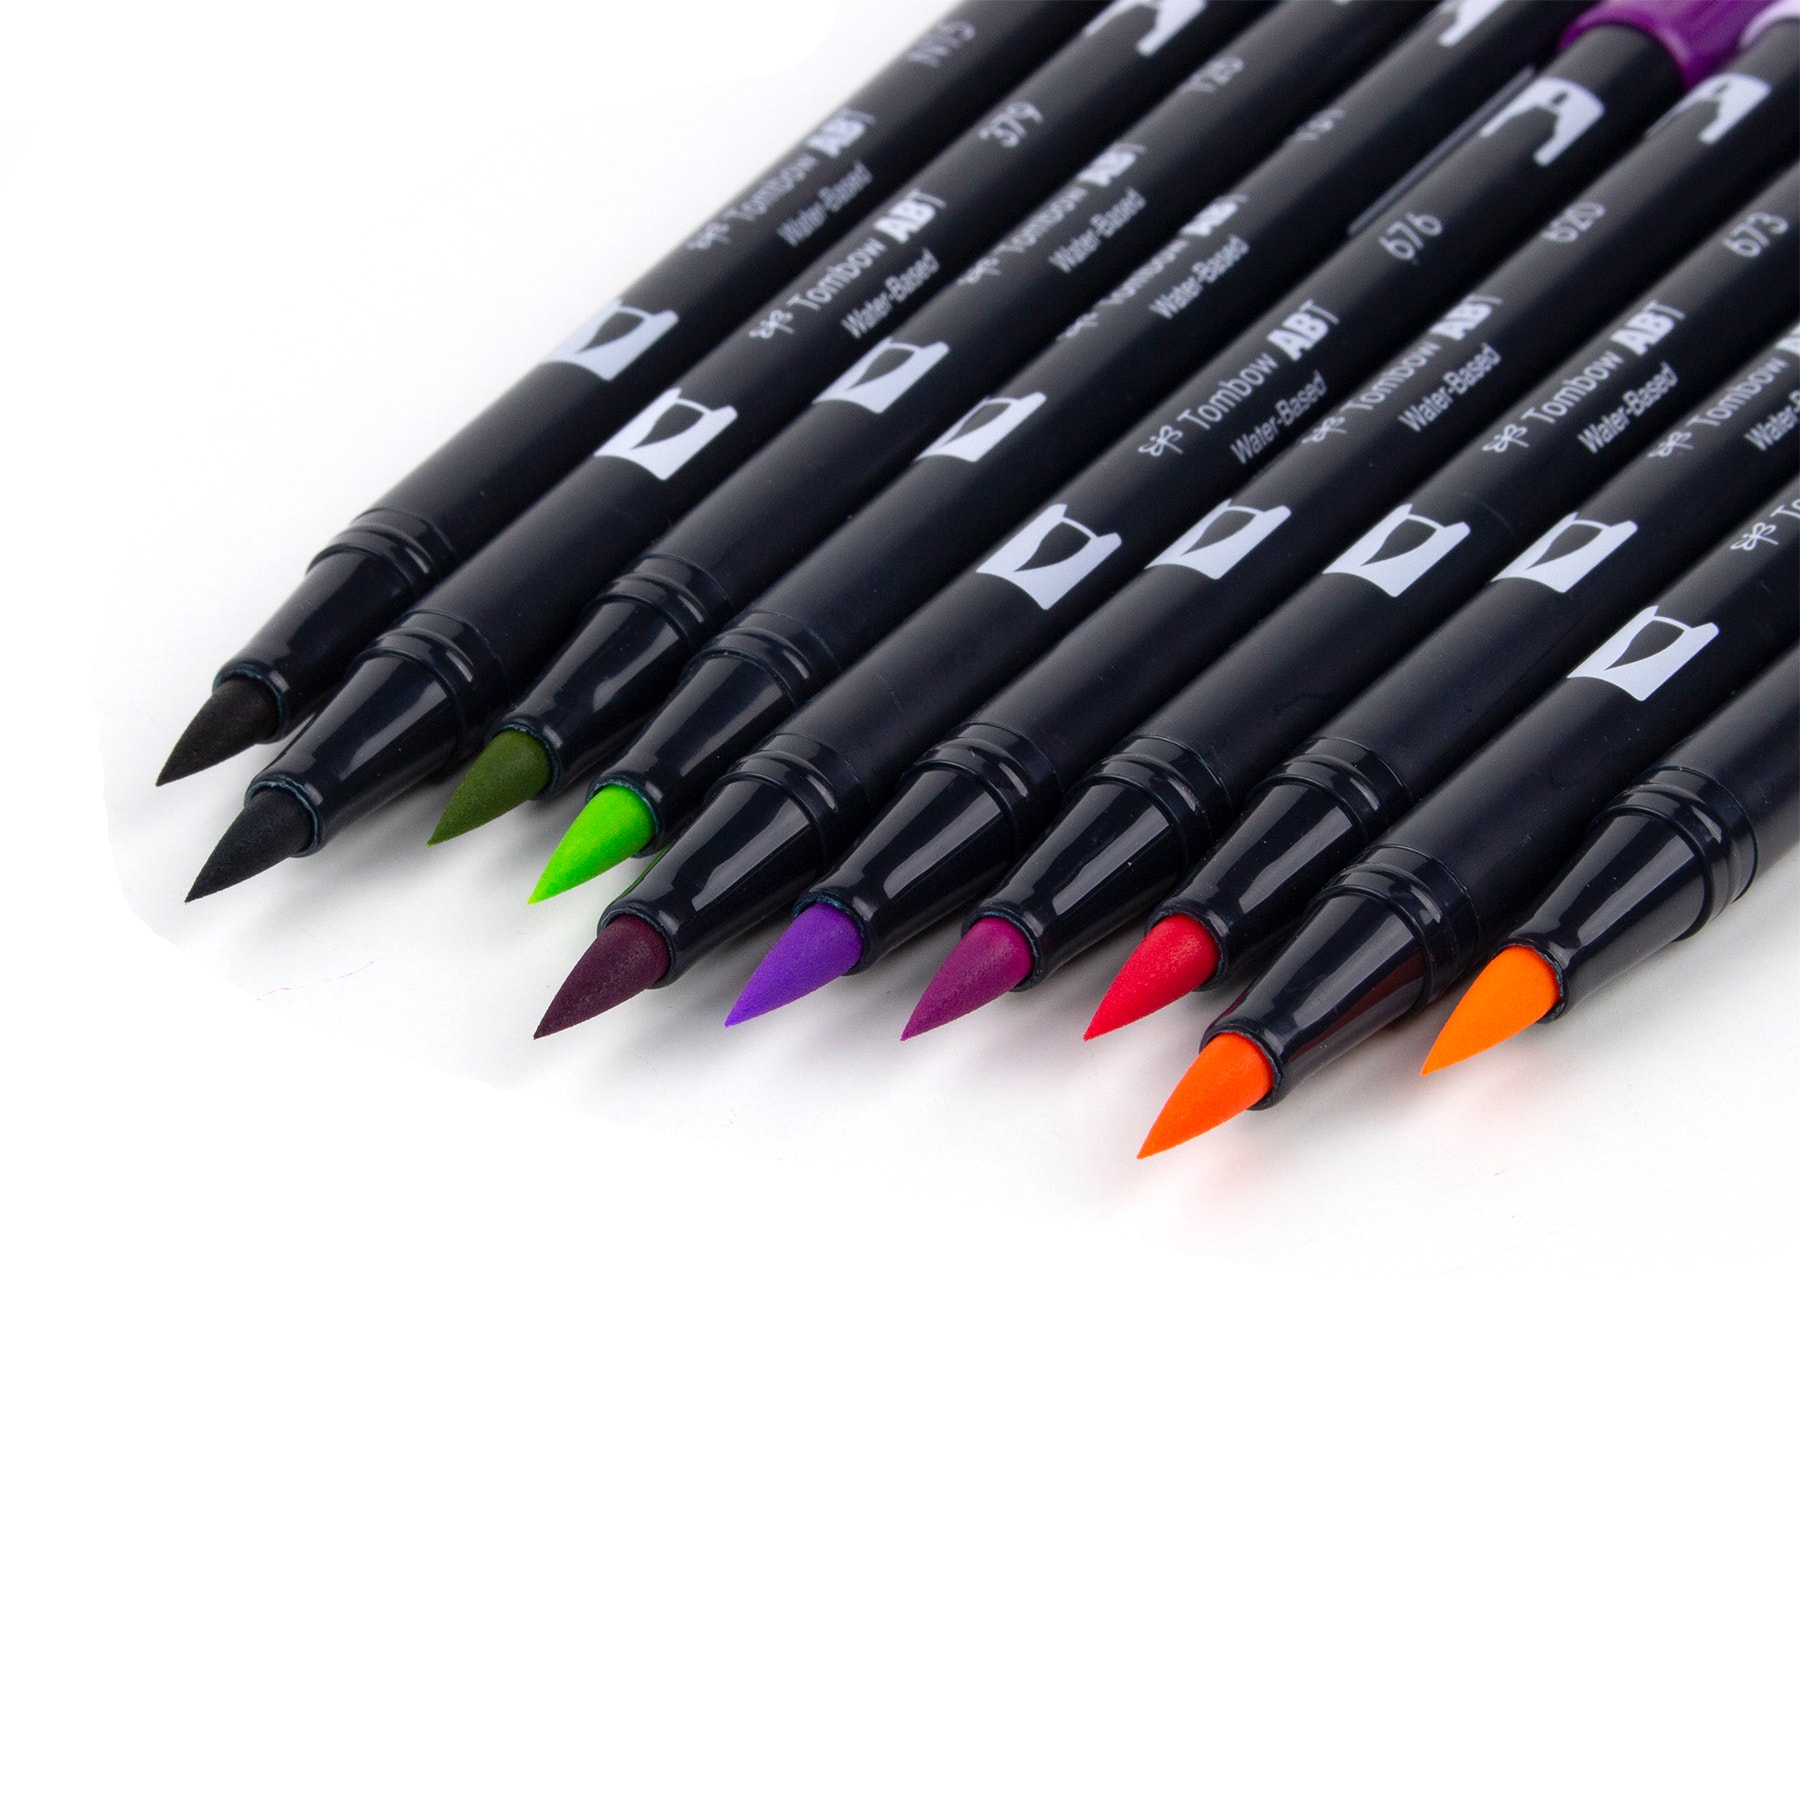 6 Packs: 10 ct. (60 total) Tombow Lettering Favorites Dual Brush Pens